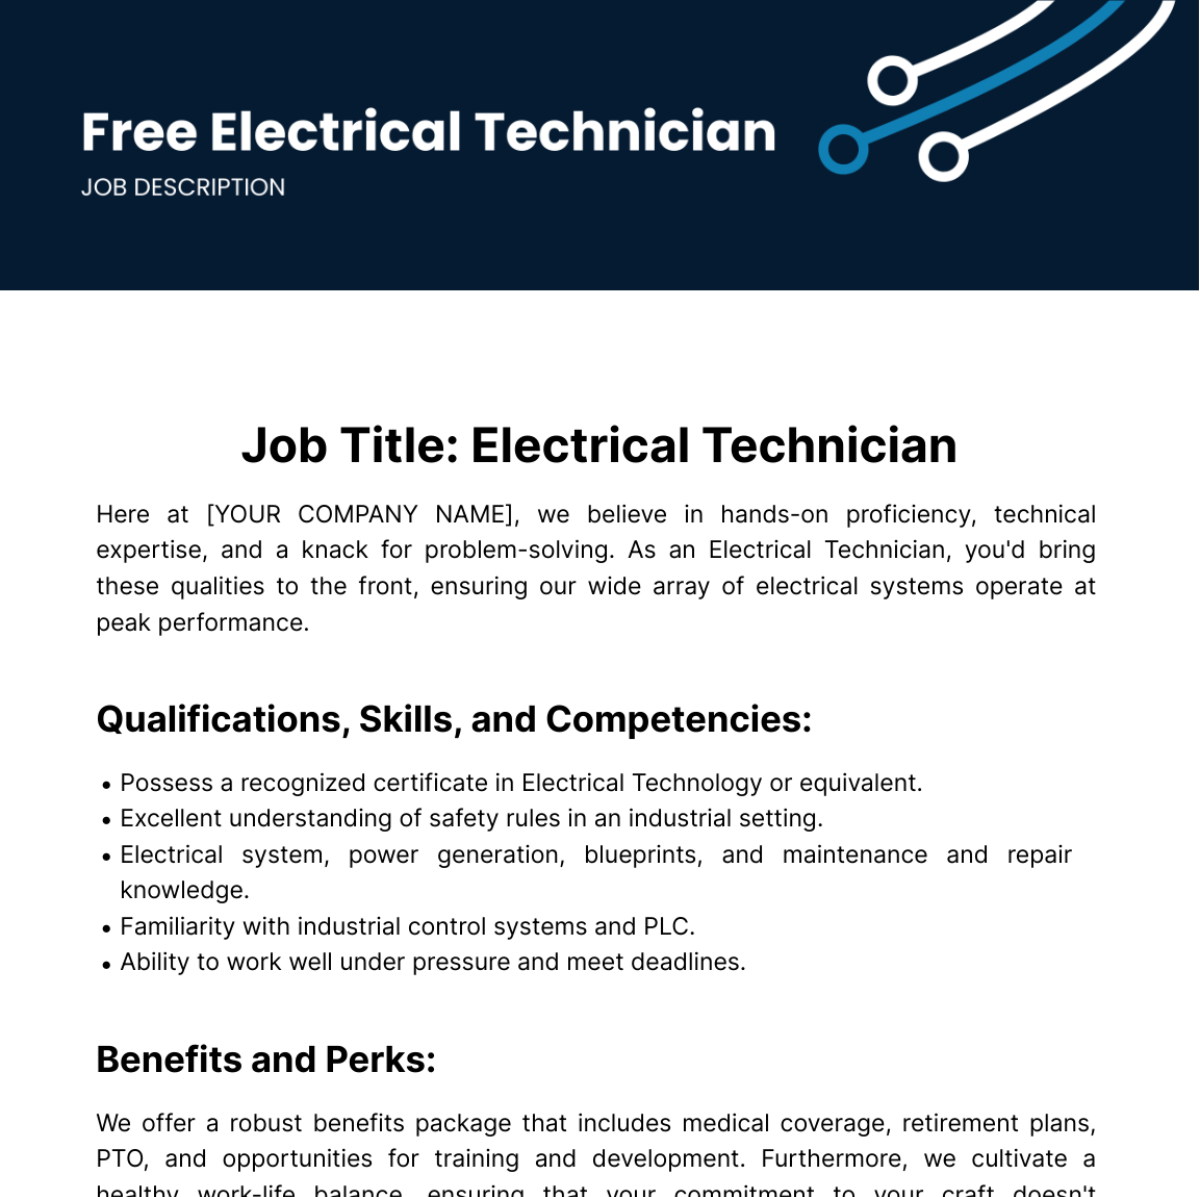 Free Electrical Technician Job Description Template